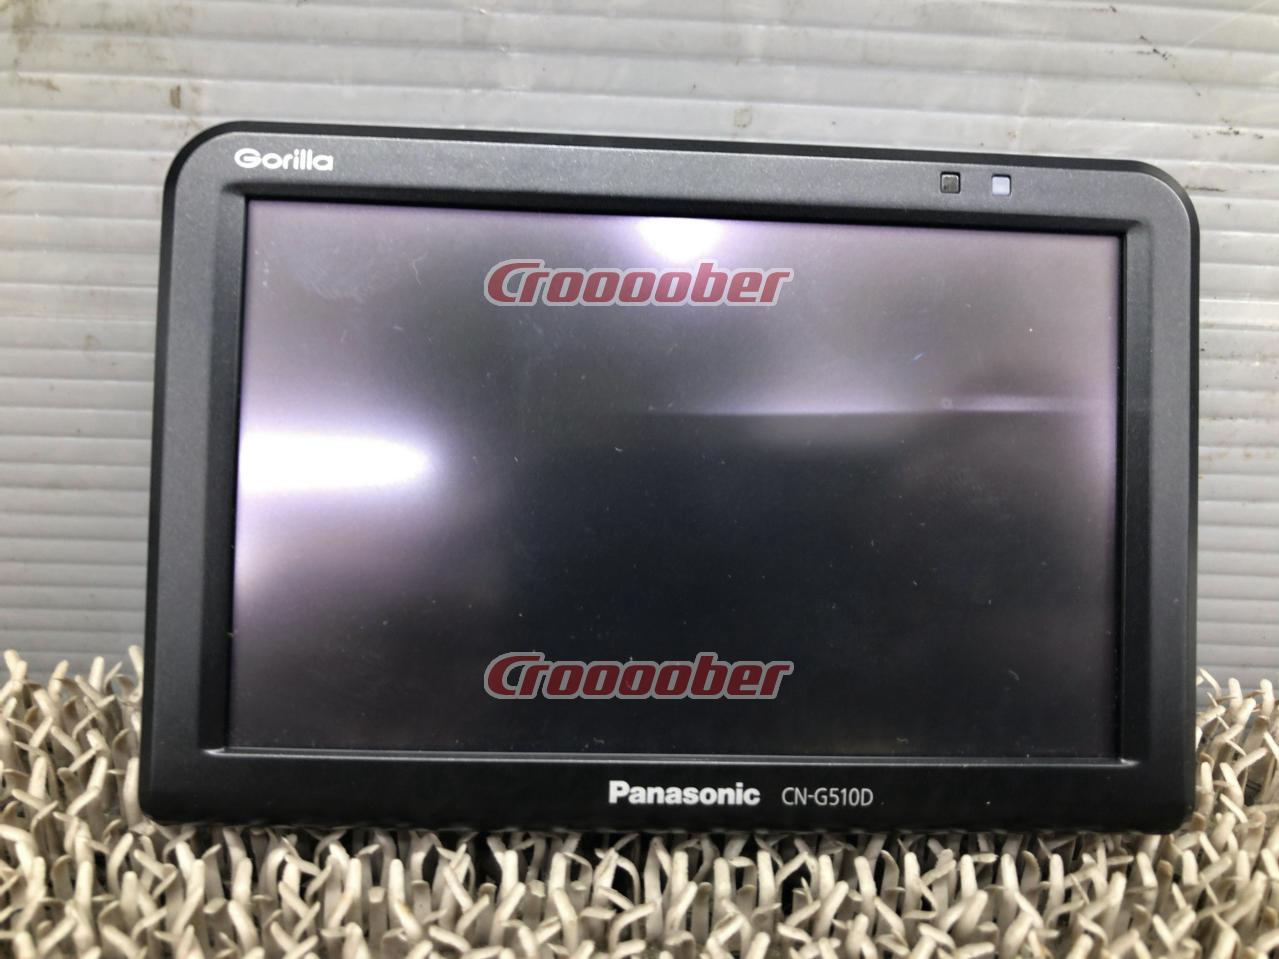 Panasonic CN-G510D | Portable Navigation(digital) | Croooober